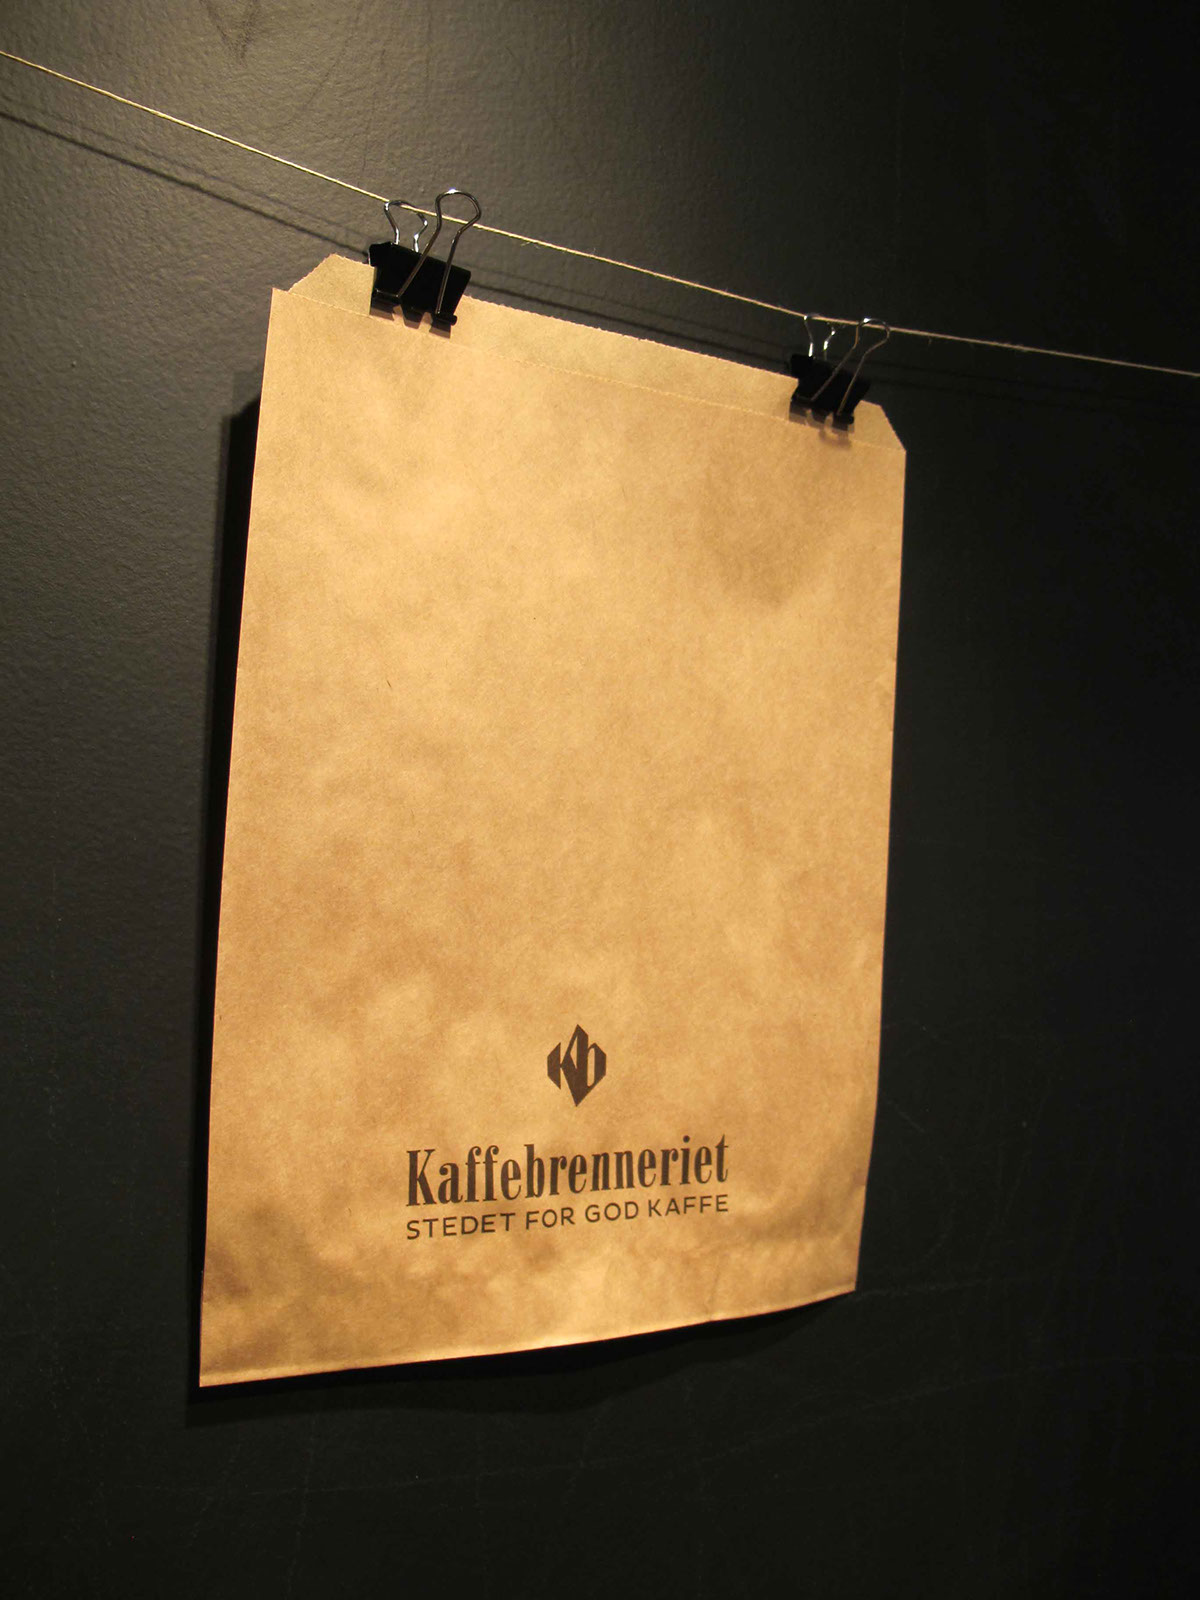 kaffebrenneriet Coffee coffee shop logo Grafisk profil profilering graphic profil identity